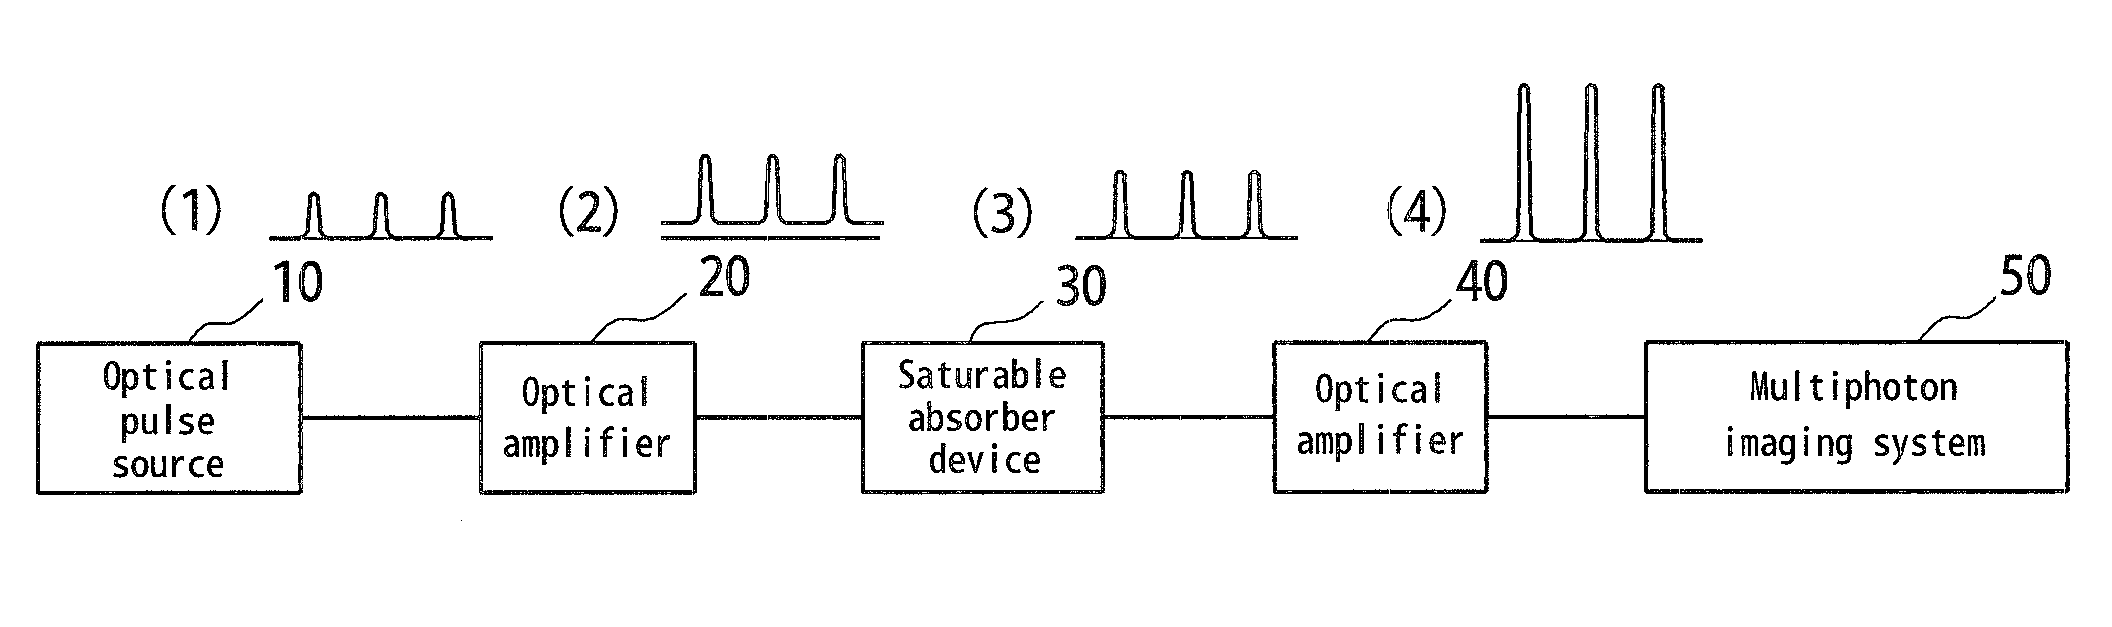 Optical pulse source device